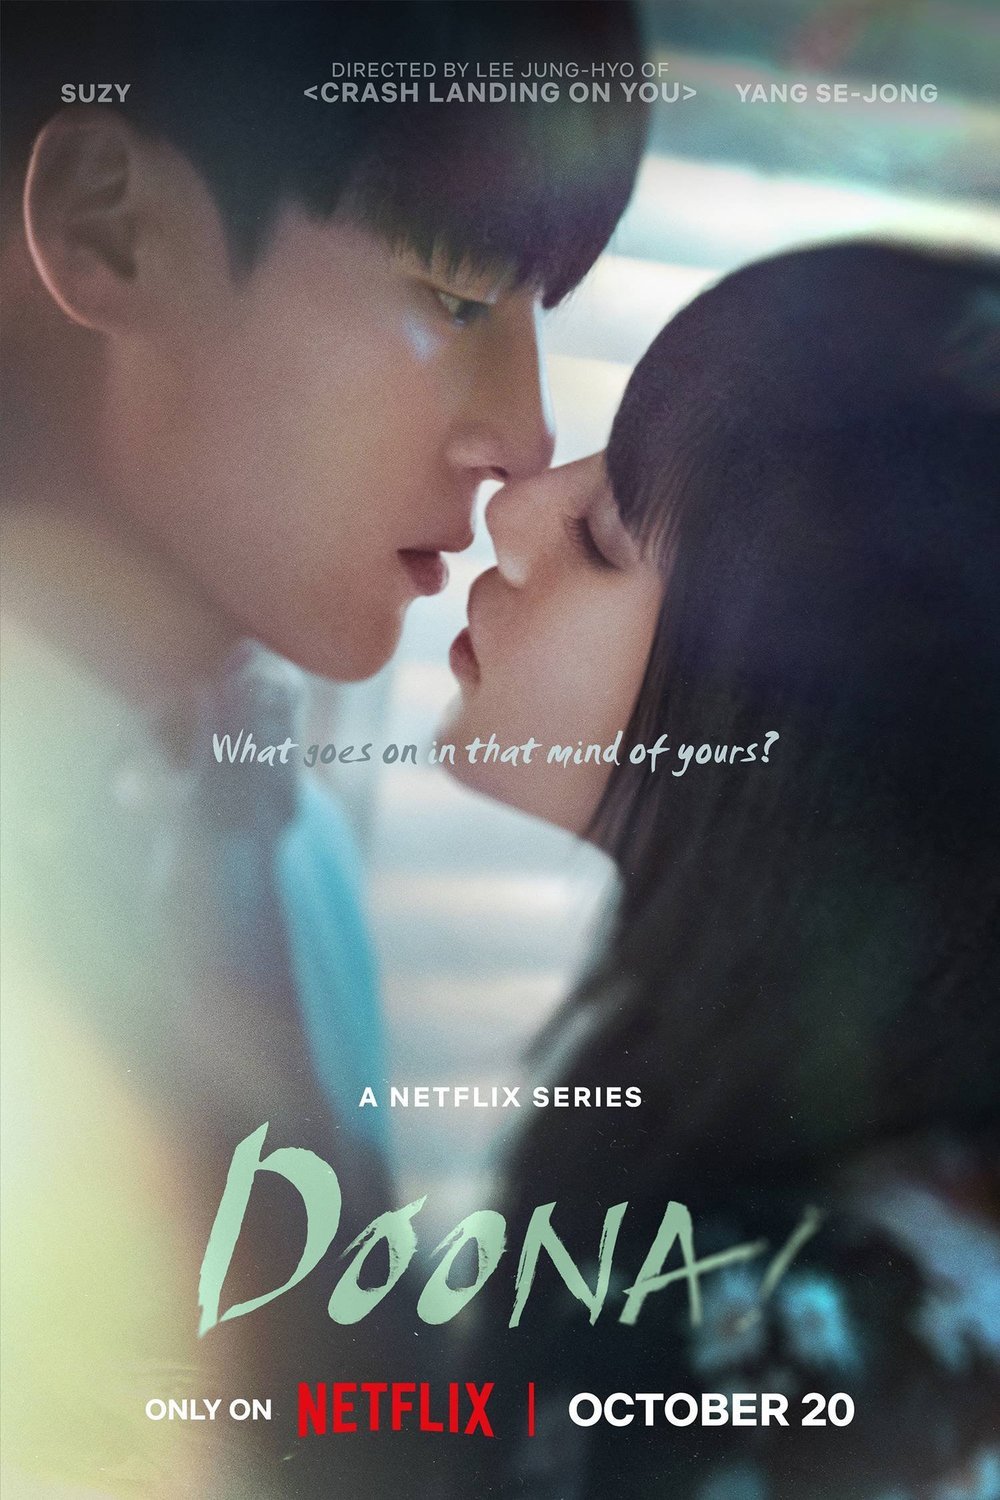 Korean poster of the movie Doona!